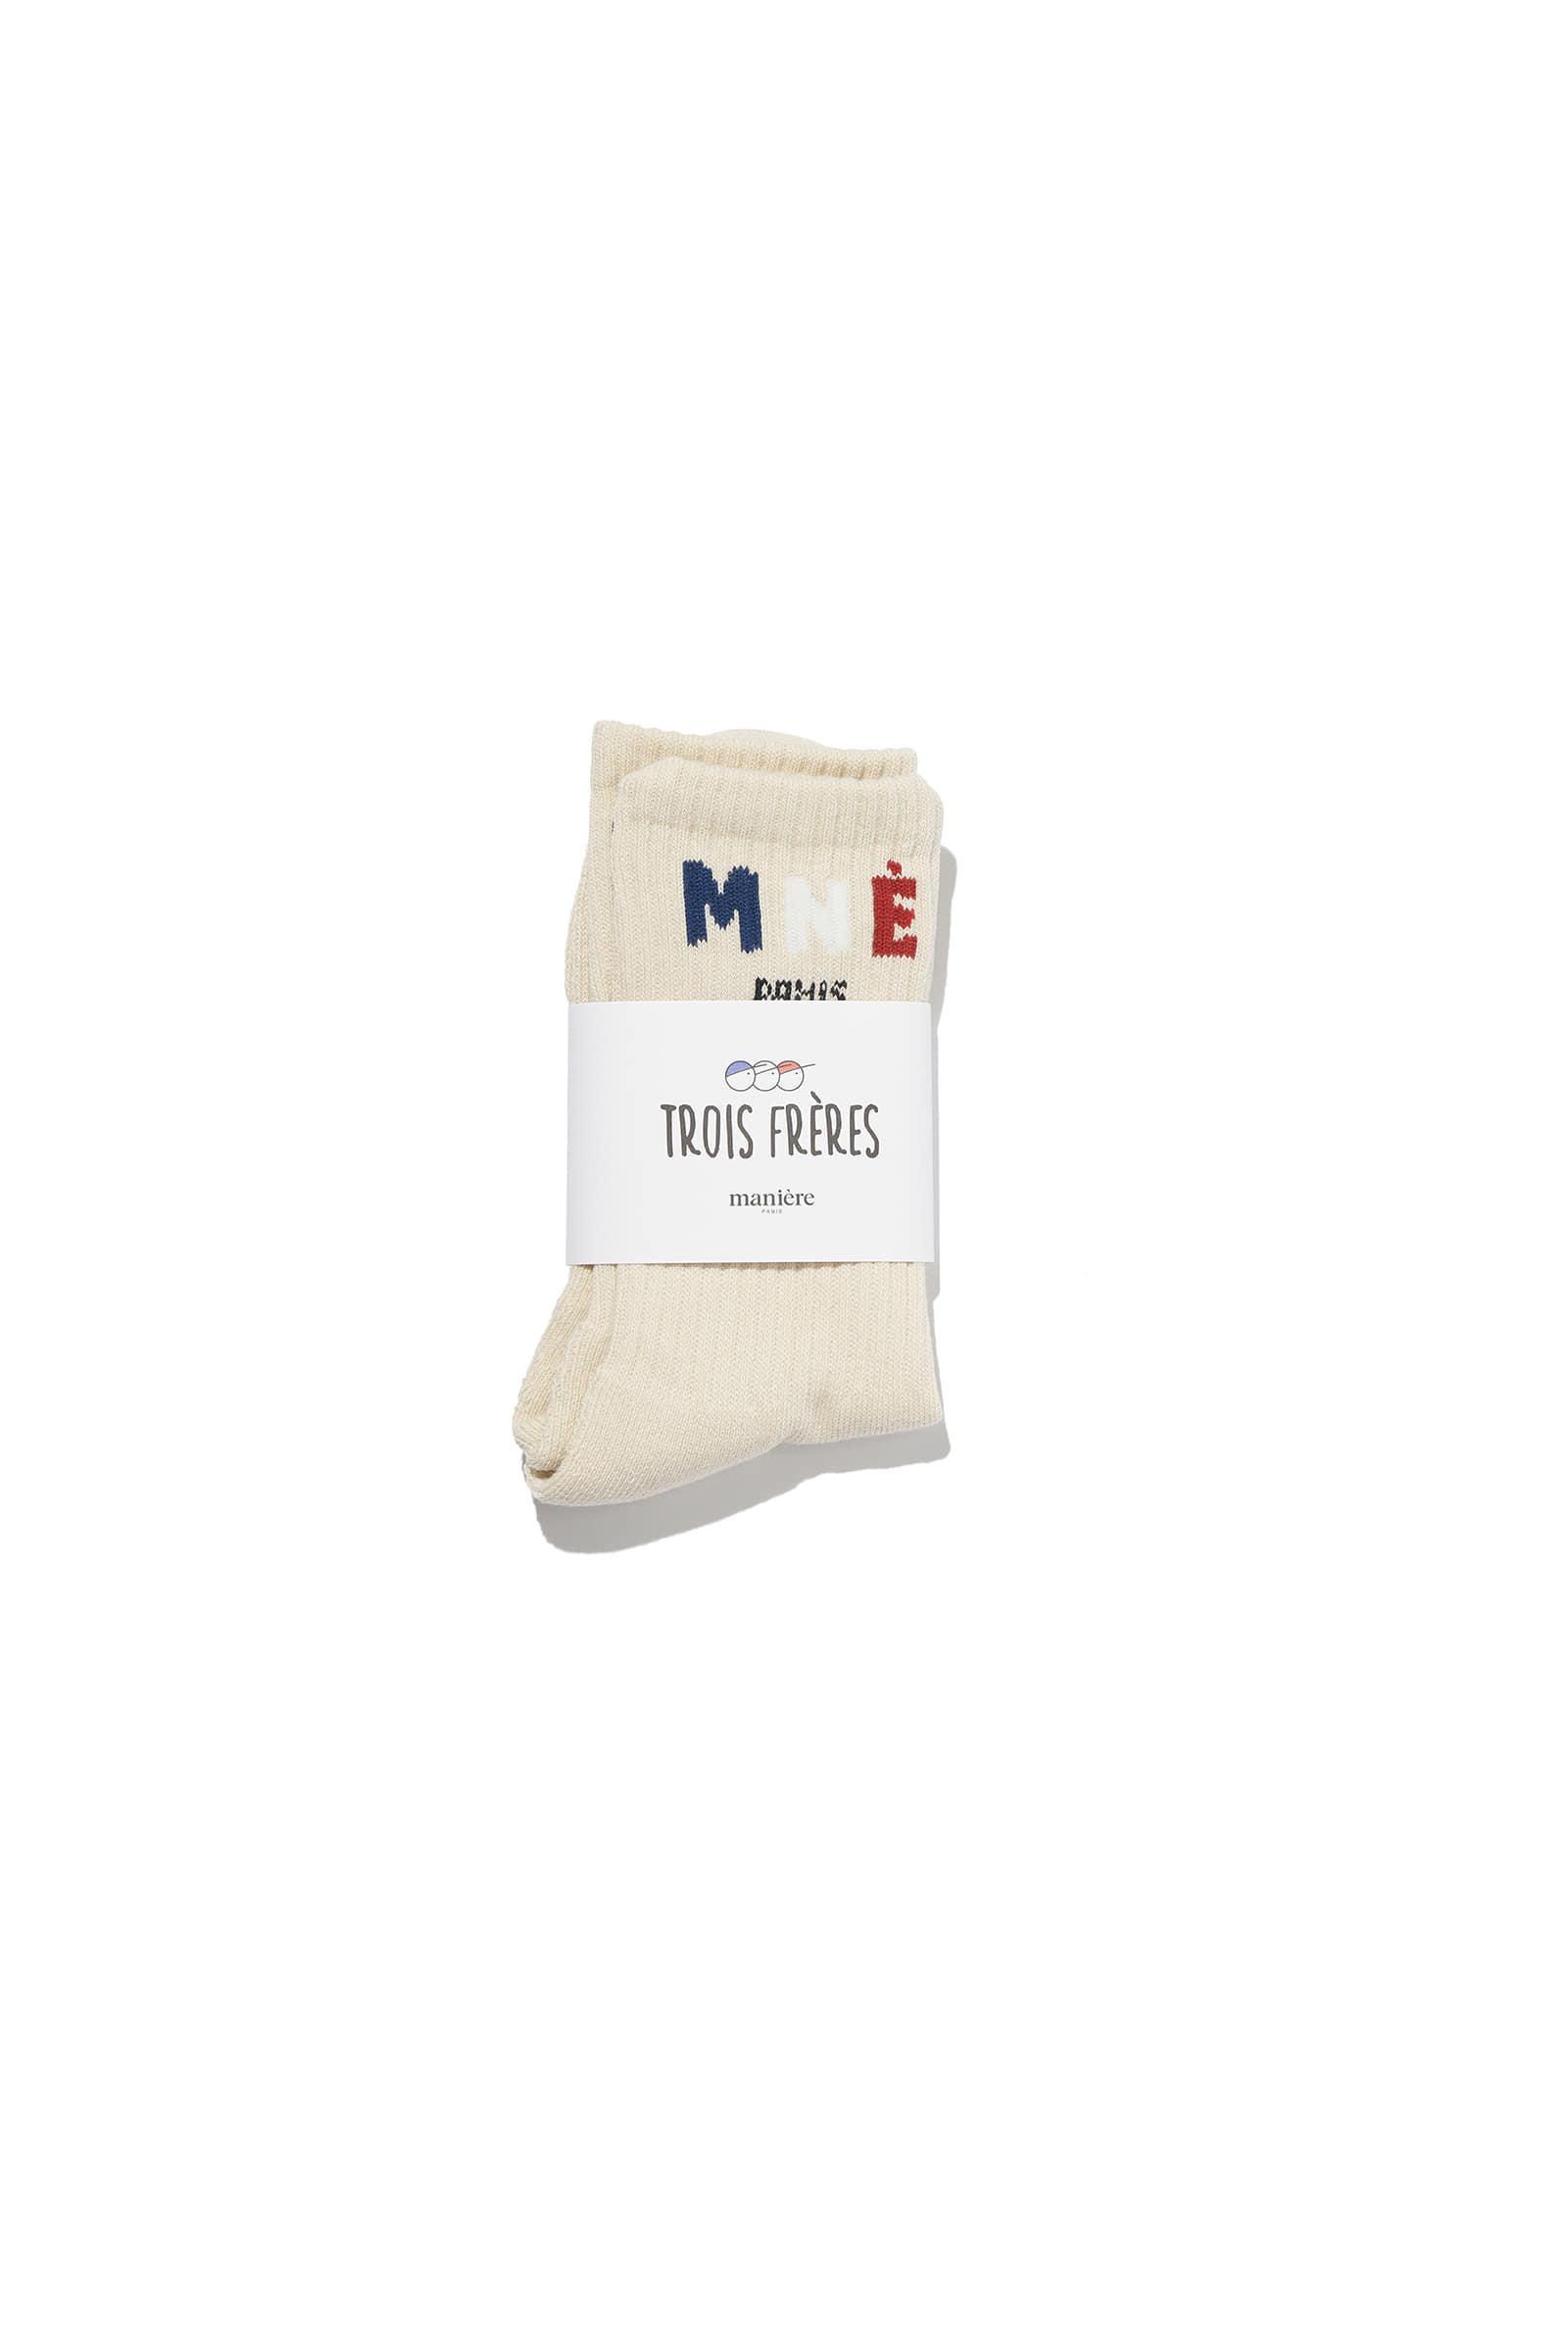 maniére MNE sports socks